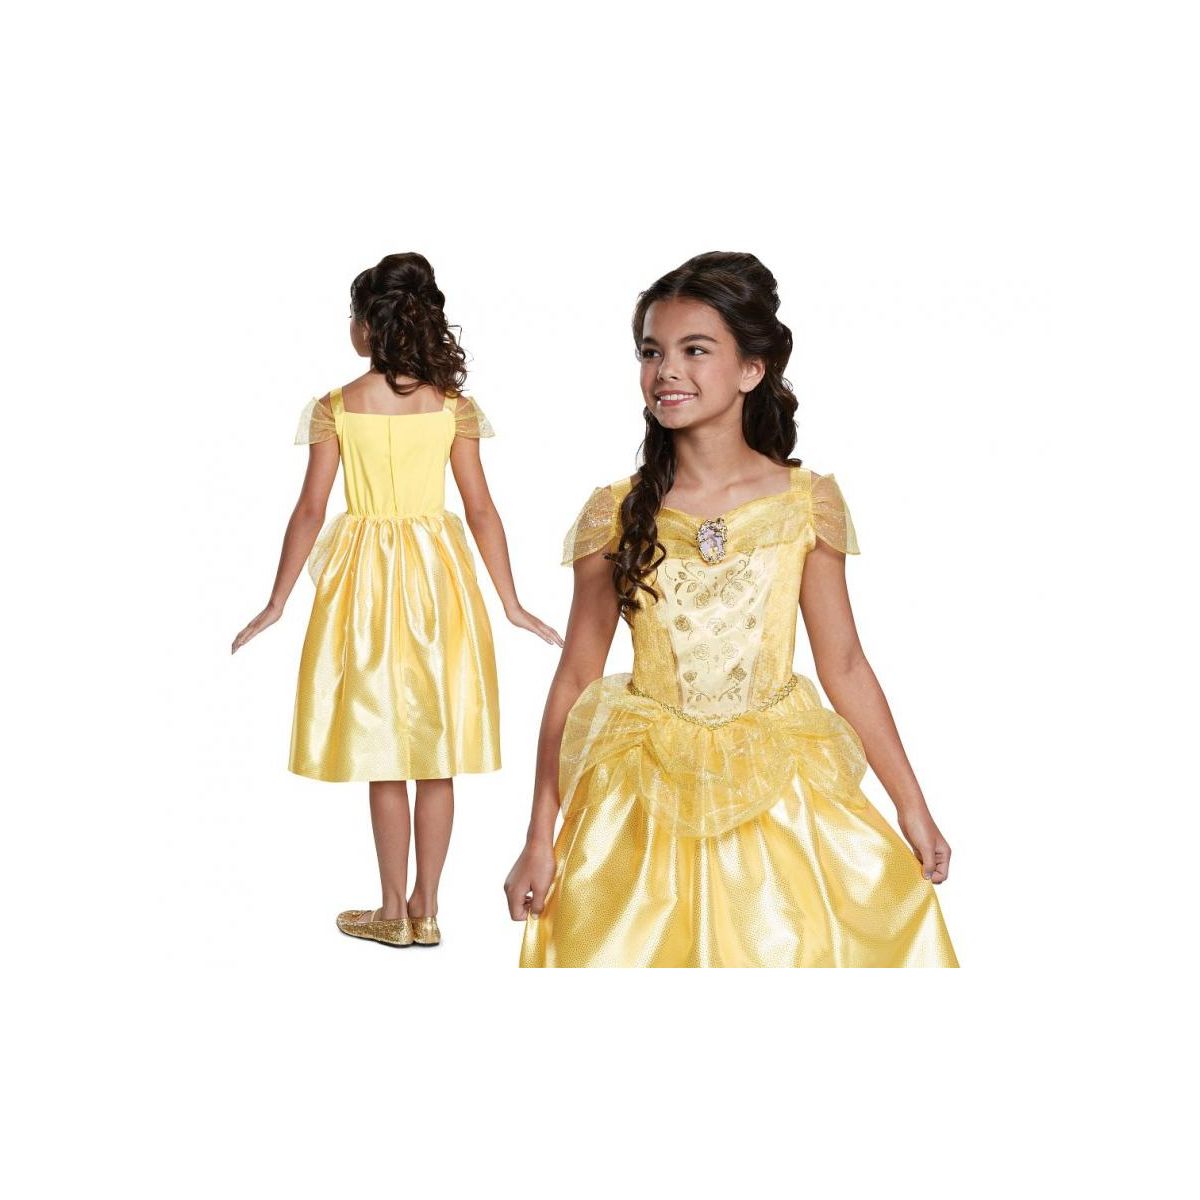 Kostium Belle Classic - Princess (licencja), rozm. M (7-8 lat) Godan (129509K)